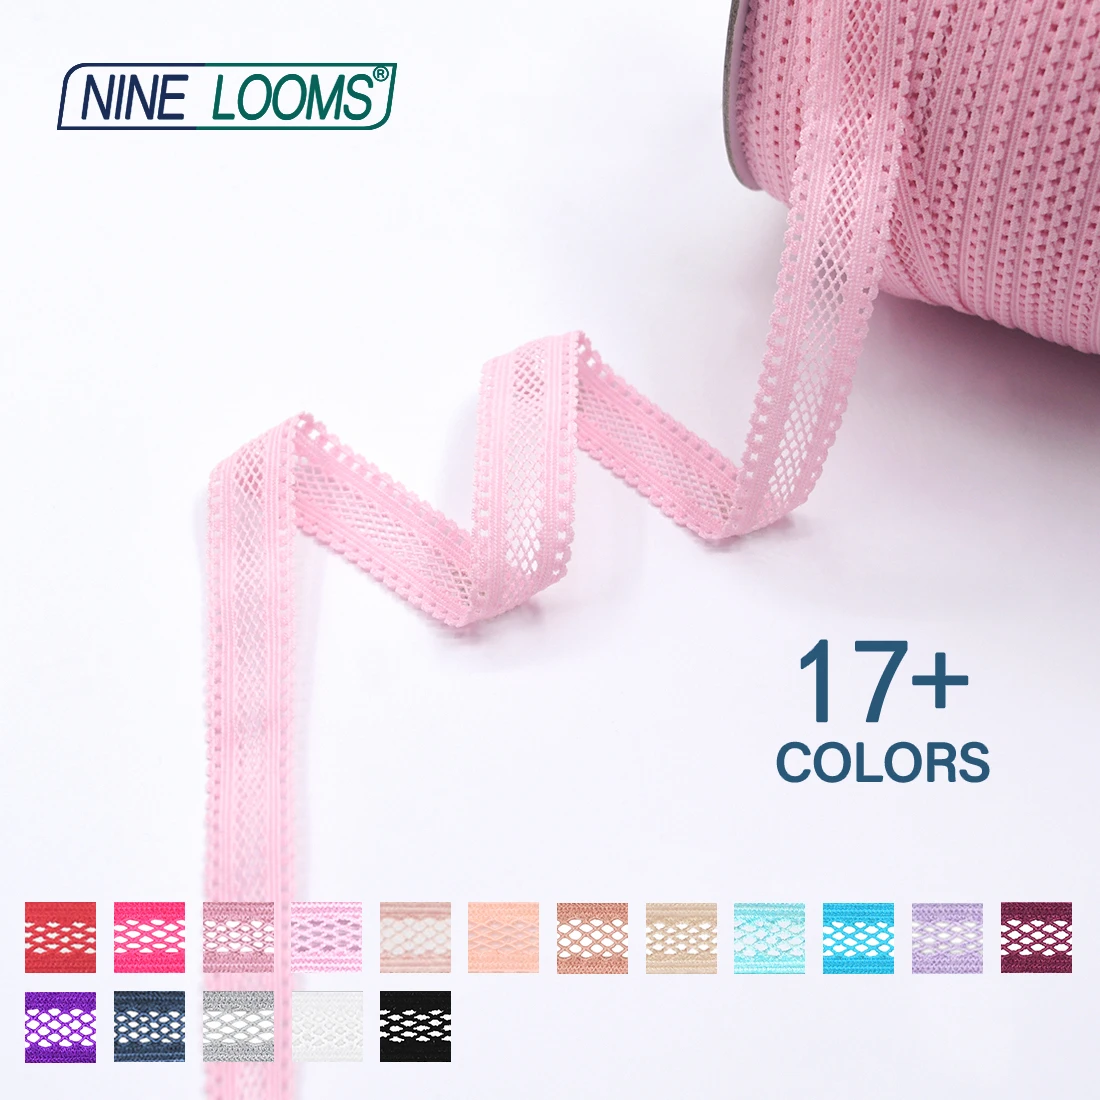 

NINE LOOMS Picot Loop Mesh Lace Trim Elastic 5/8" 15mm Decorative Spandex Bands Tape Underwear Lingerie Sewing Craft 2 5 10 Yard